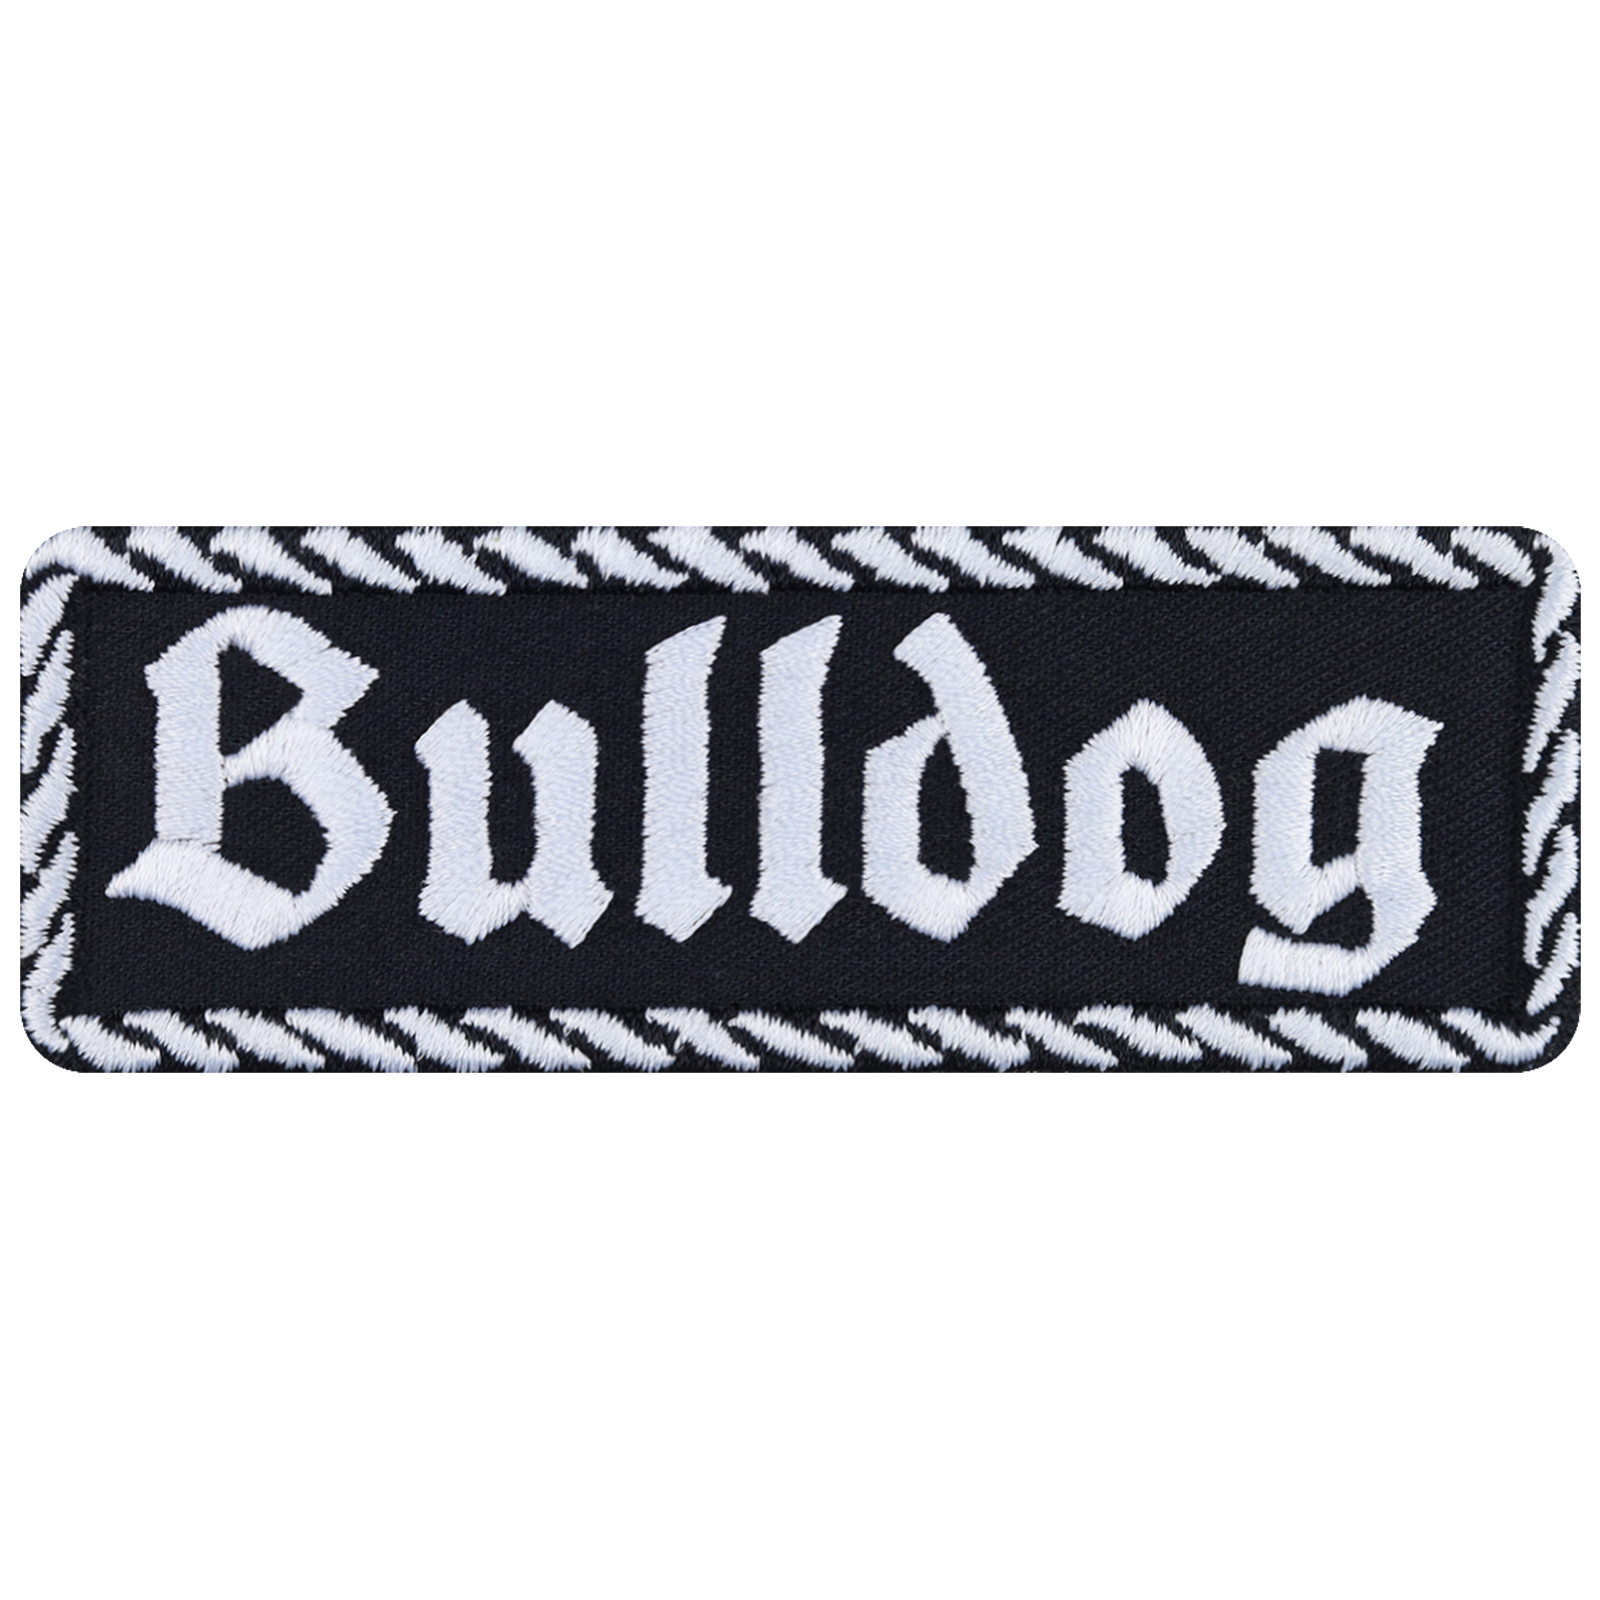 Bulldog - Patch